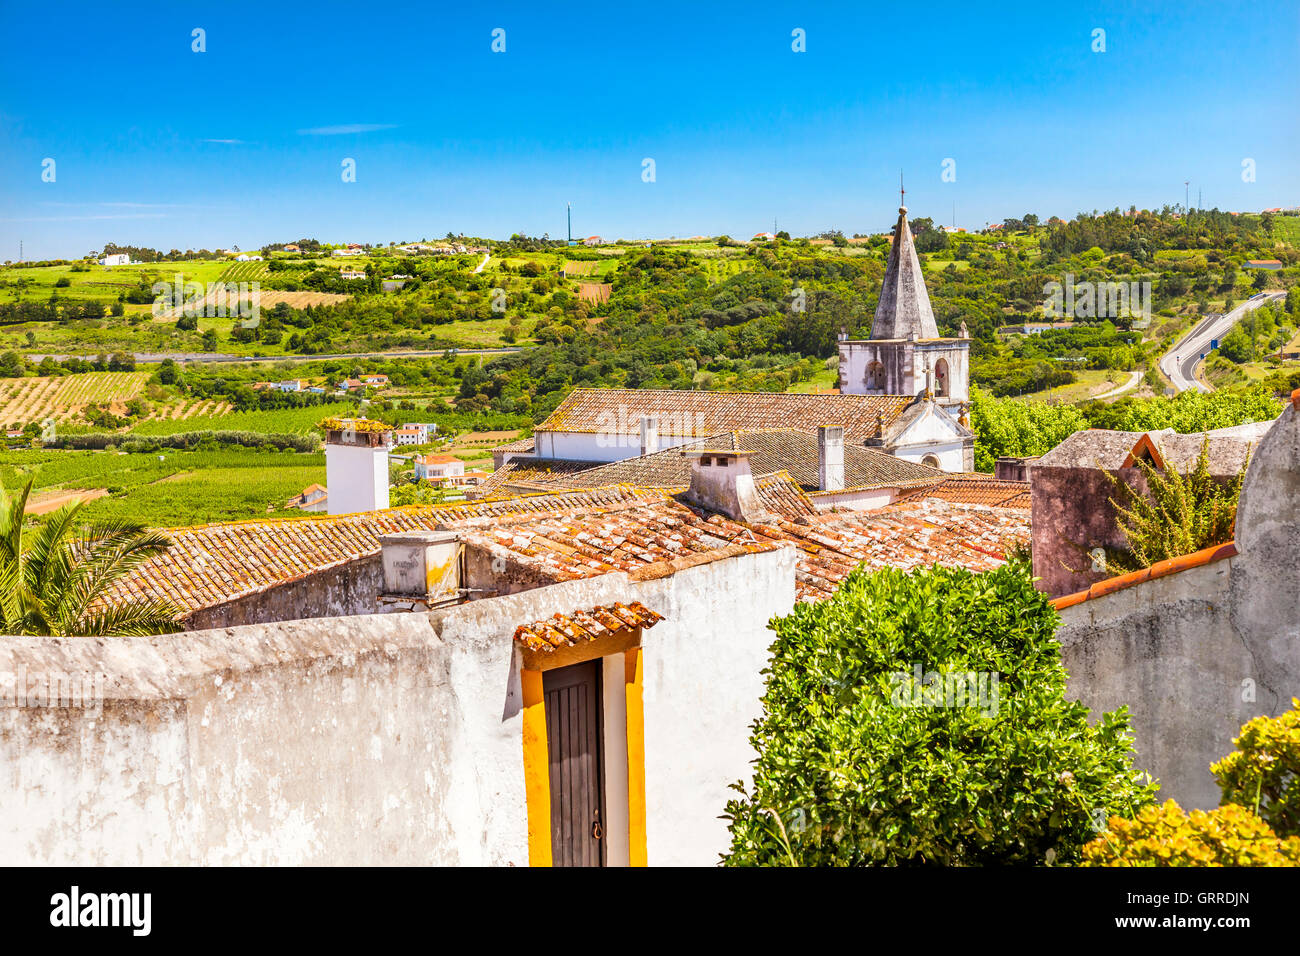 Sao Paolo Church Orange Roofs Countryside Farmland Medieval Town Obidos Portugal. Stock Photo